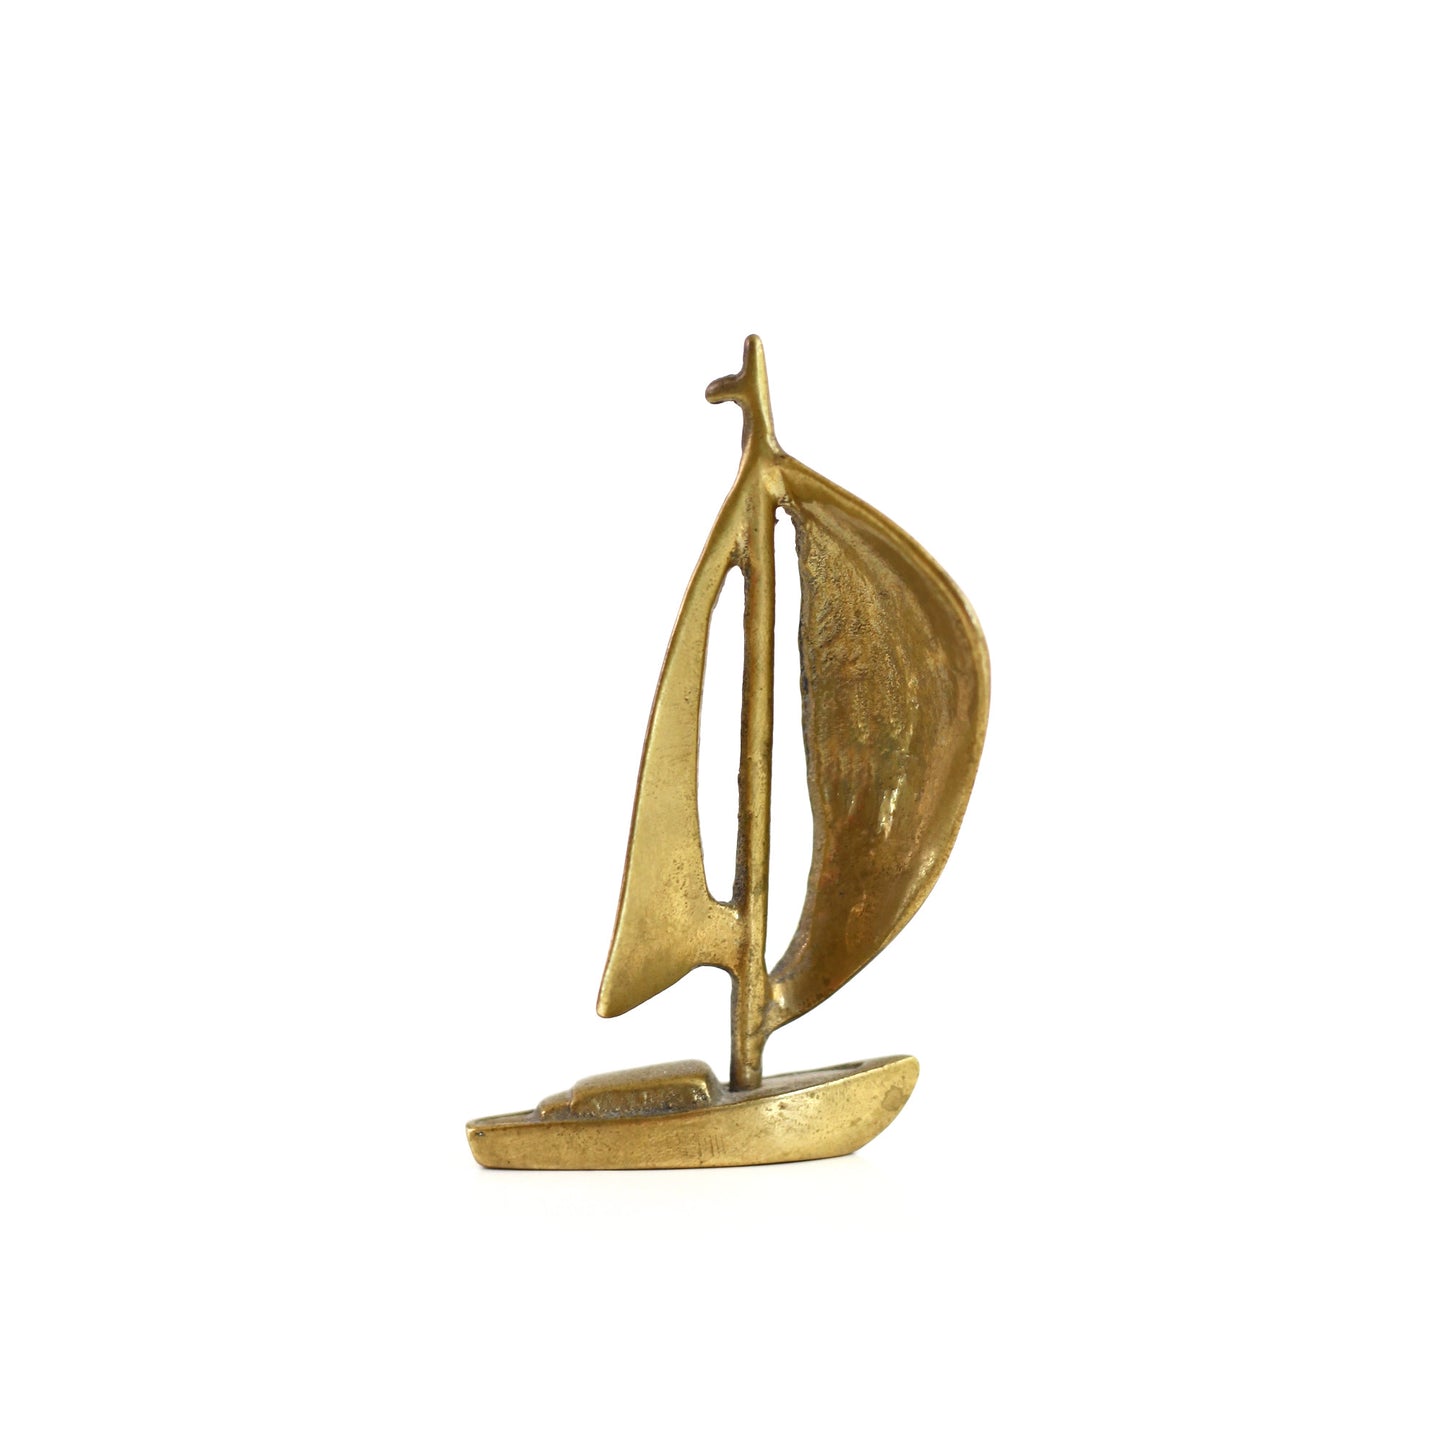 SOLD - Vintage Brass Sailboat Figurine